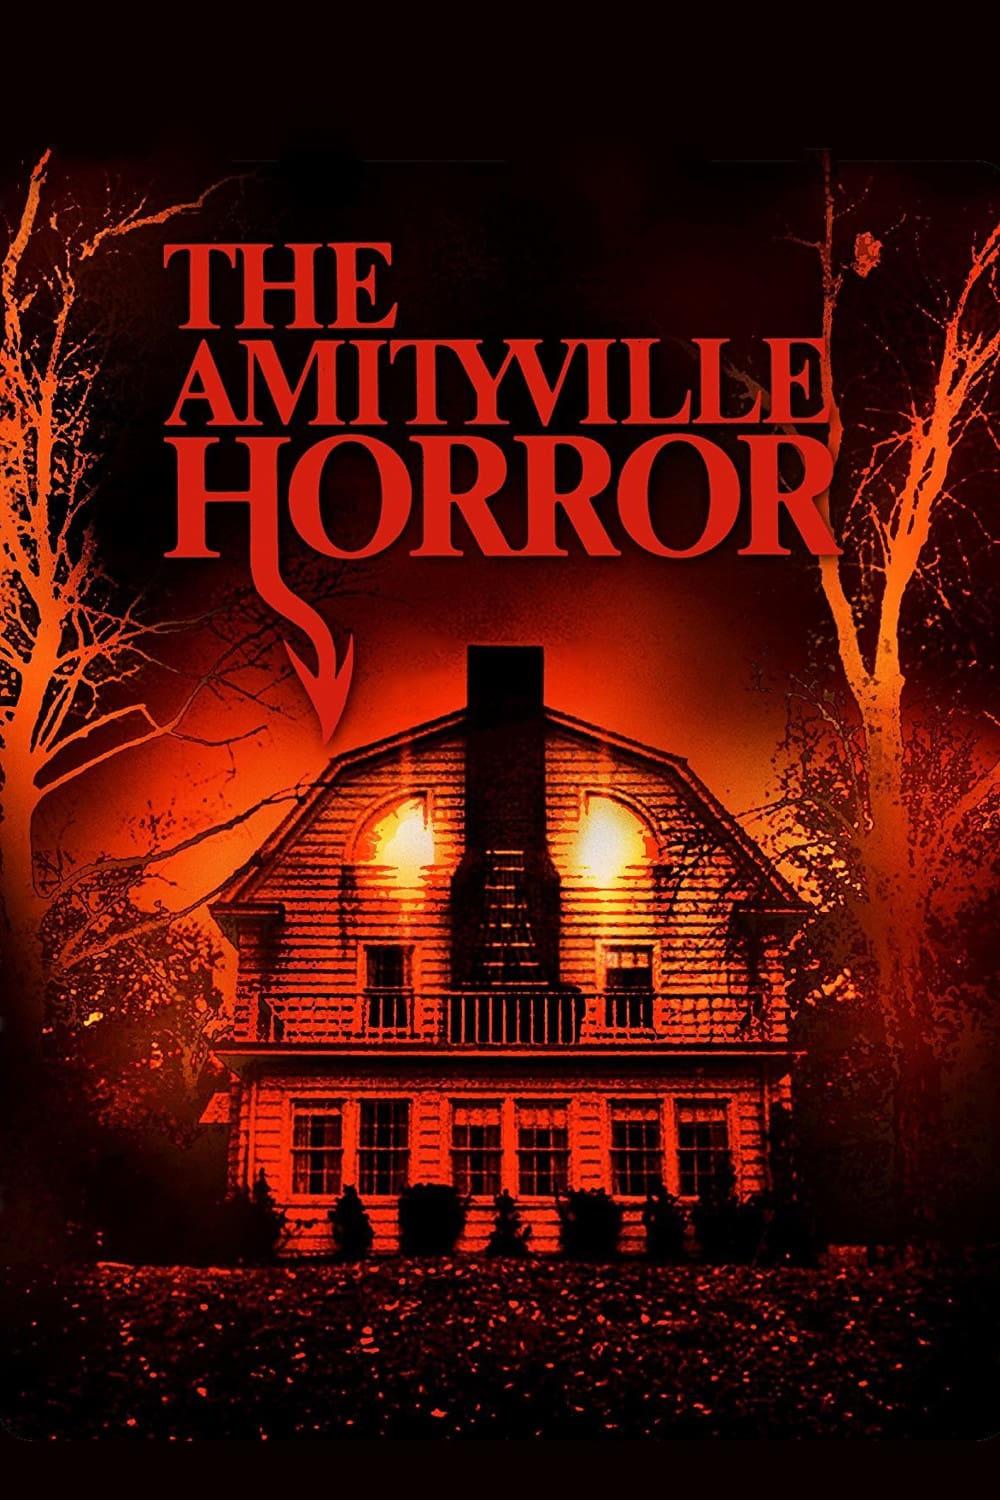 Amityville Horror poster